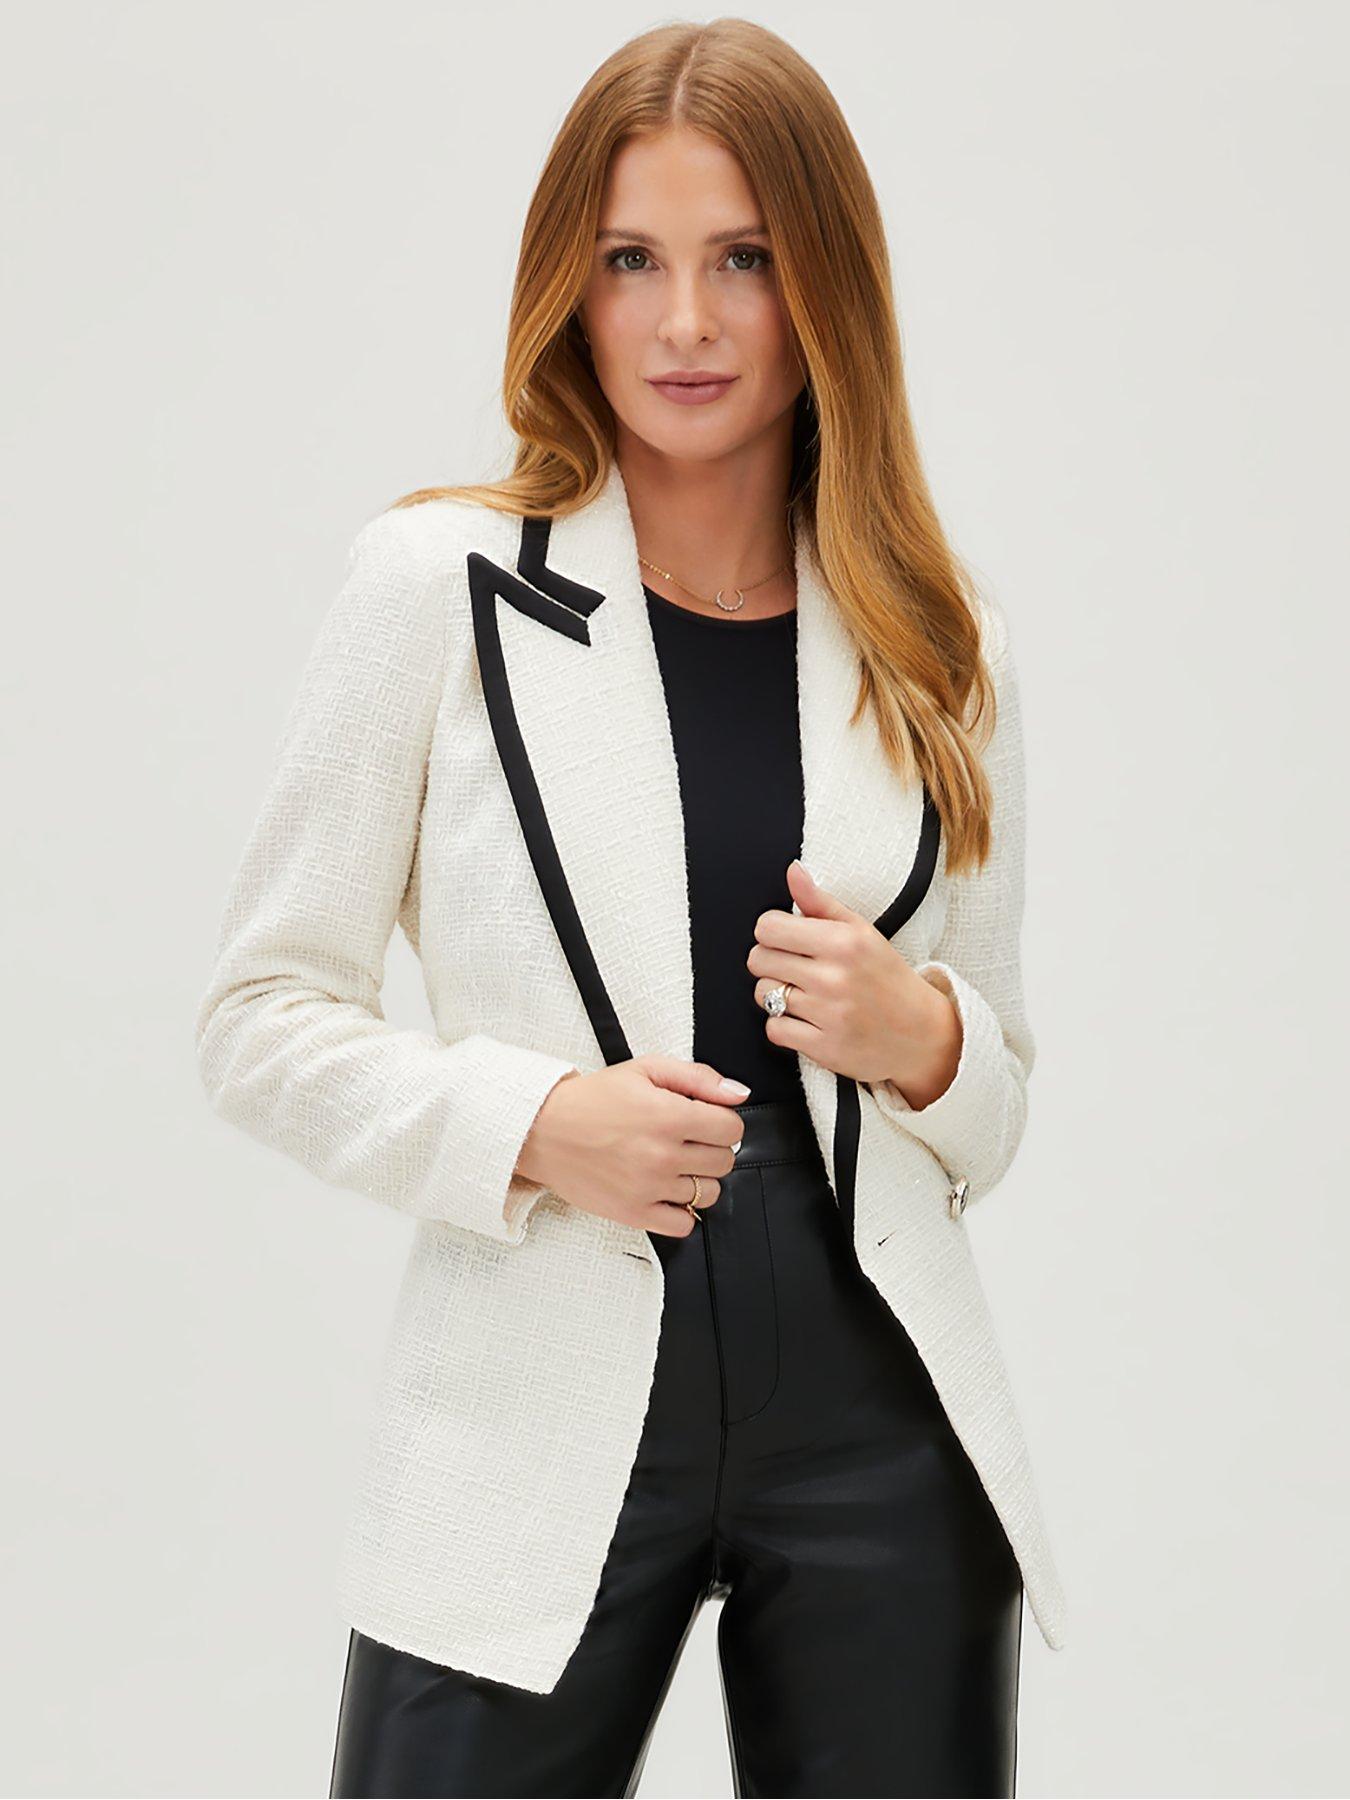 Brown/Multicolored S Sfera blazer discount 68% WOMEN FASHION Jackets Blazer Print 